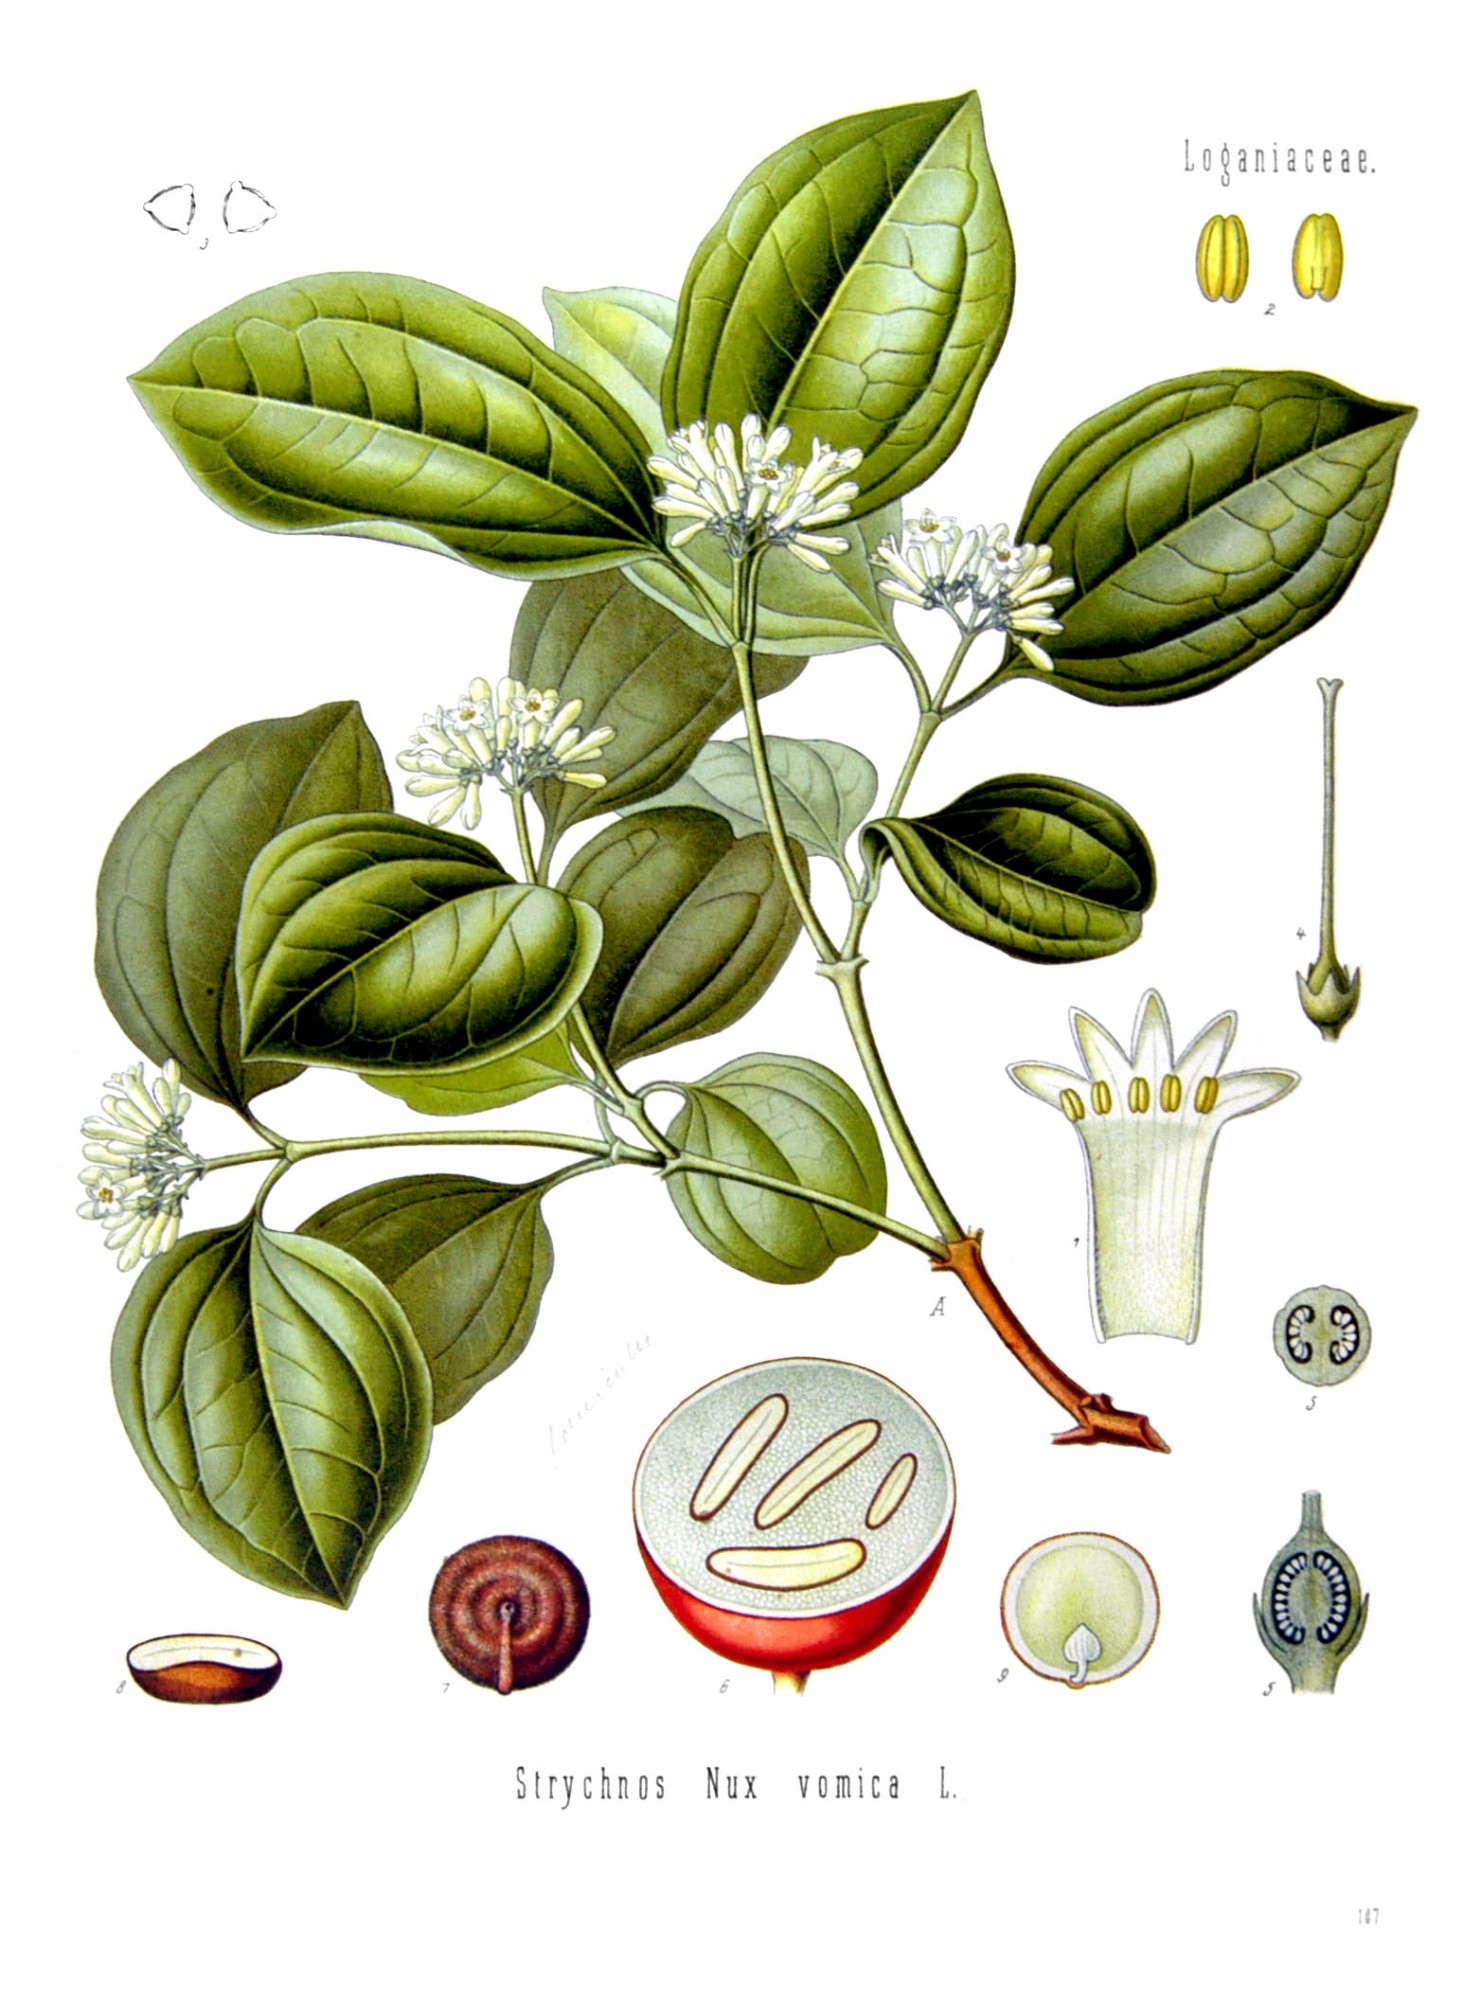 zdroj: http://upload.wikimedia.org/wikipedia/commons/6/66/Strychnos_nux-vomica_-_K%C3%B6hler%E2%80%93s_Medizinal-Pflanzen-266.jpg